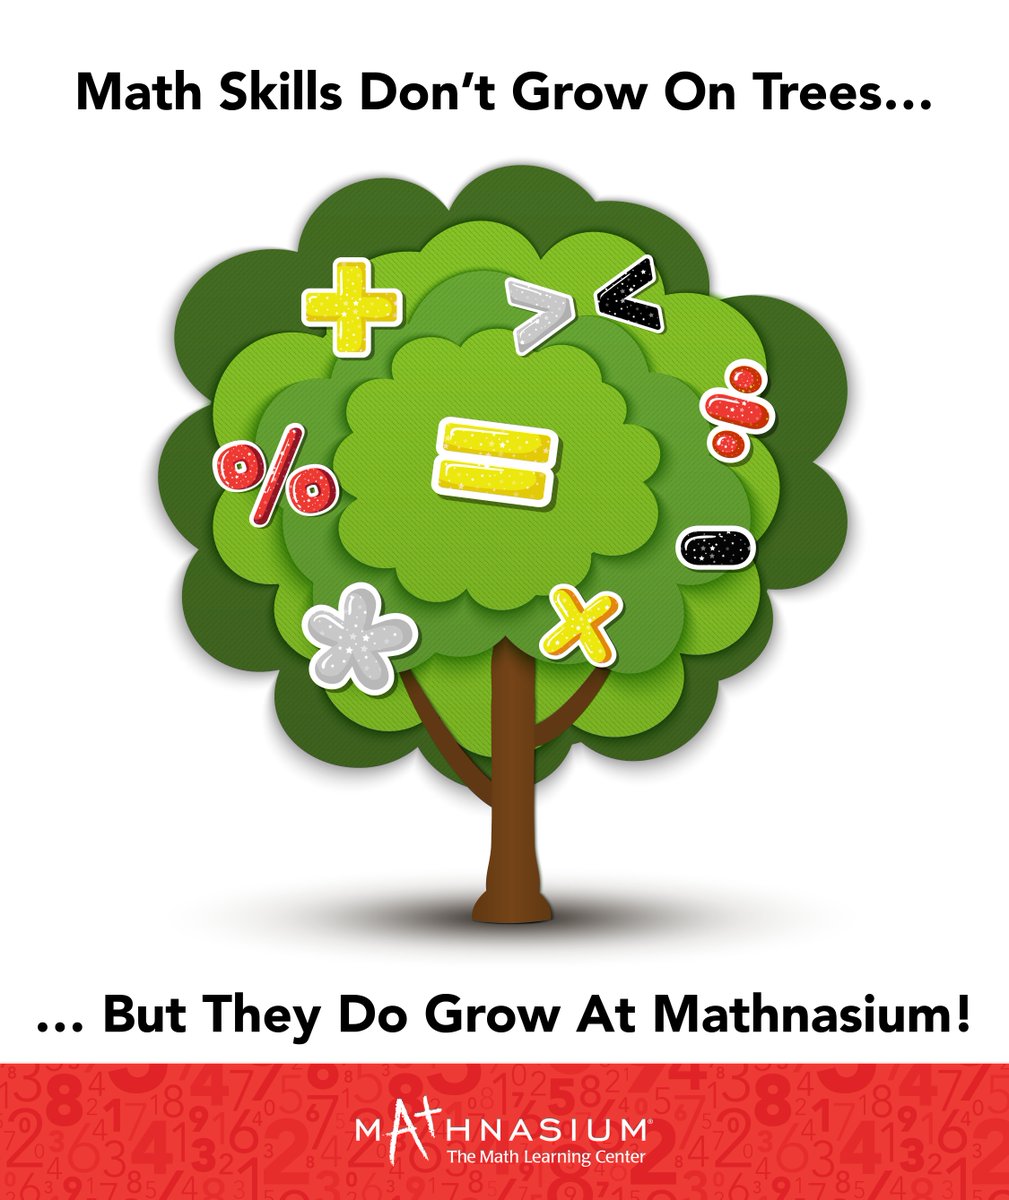 Mathnasium of Glen Ellyn is the perfect place for kids to build math skills! 🛠📚✍ Come visit us today! mathnasium.com/math-centers/g… #mathnasium #mathstudent #Mathtutor #Mathclass #mathteacher #test #mathgrade